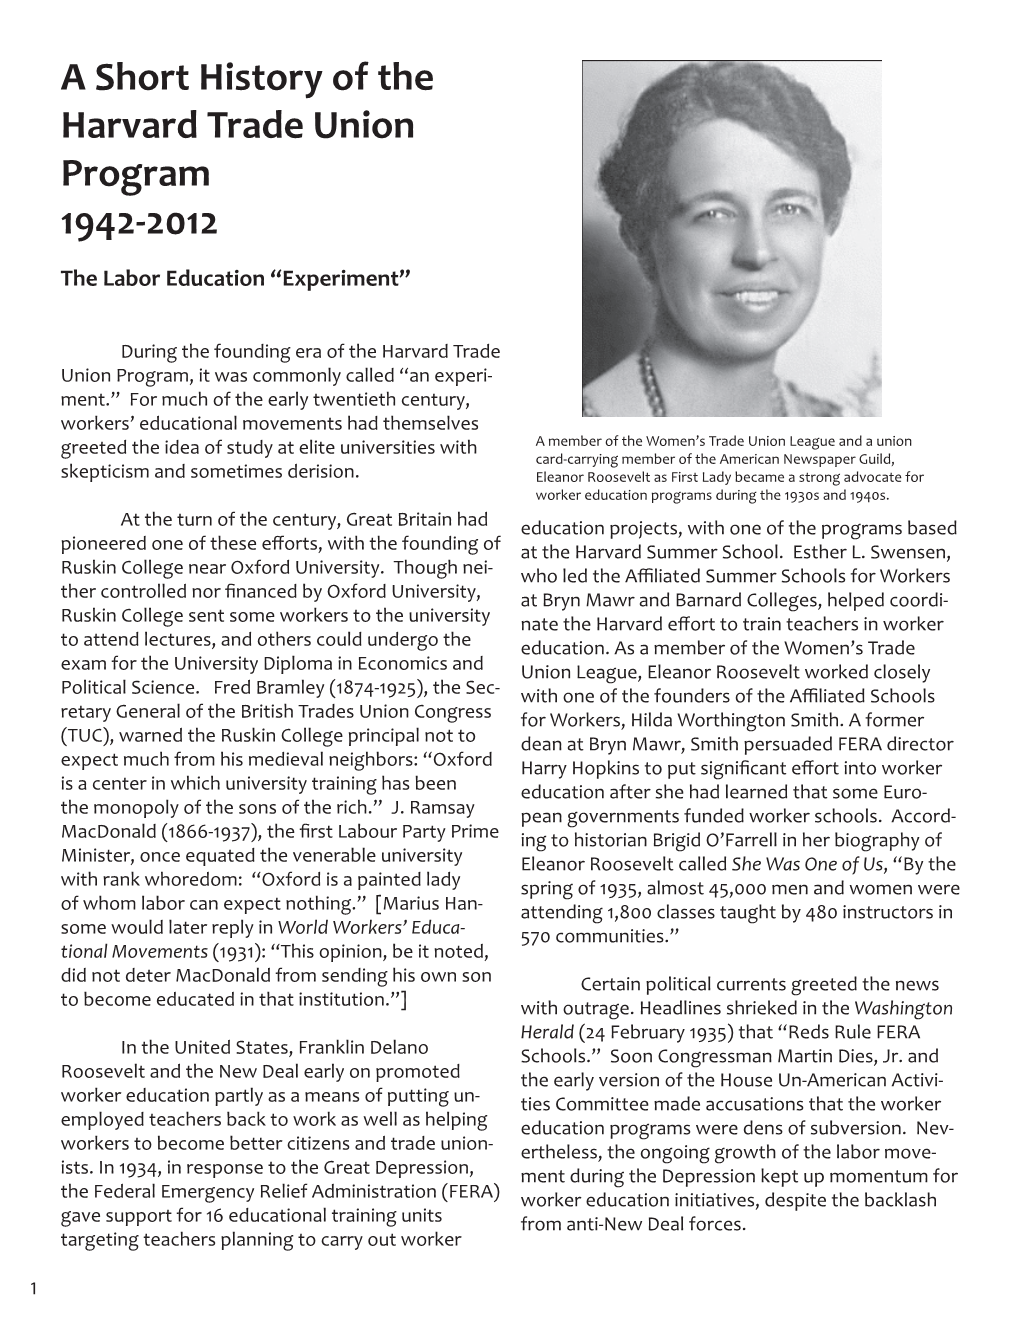 A Short History of the Harvard Trade Union Program 1942-2012